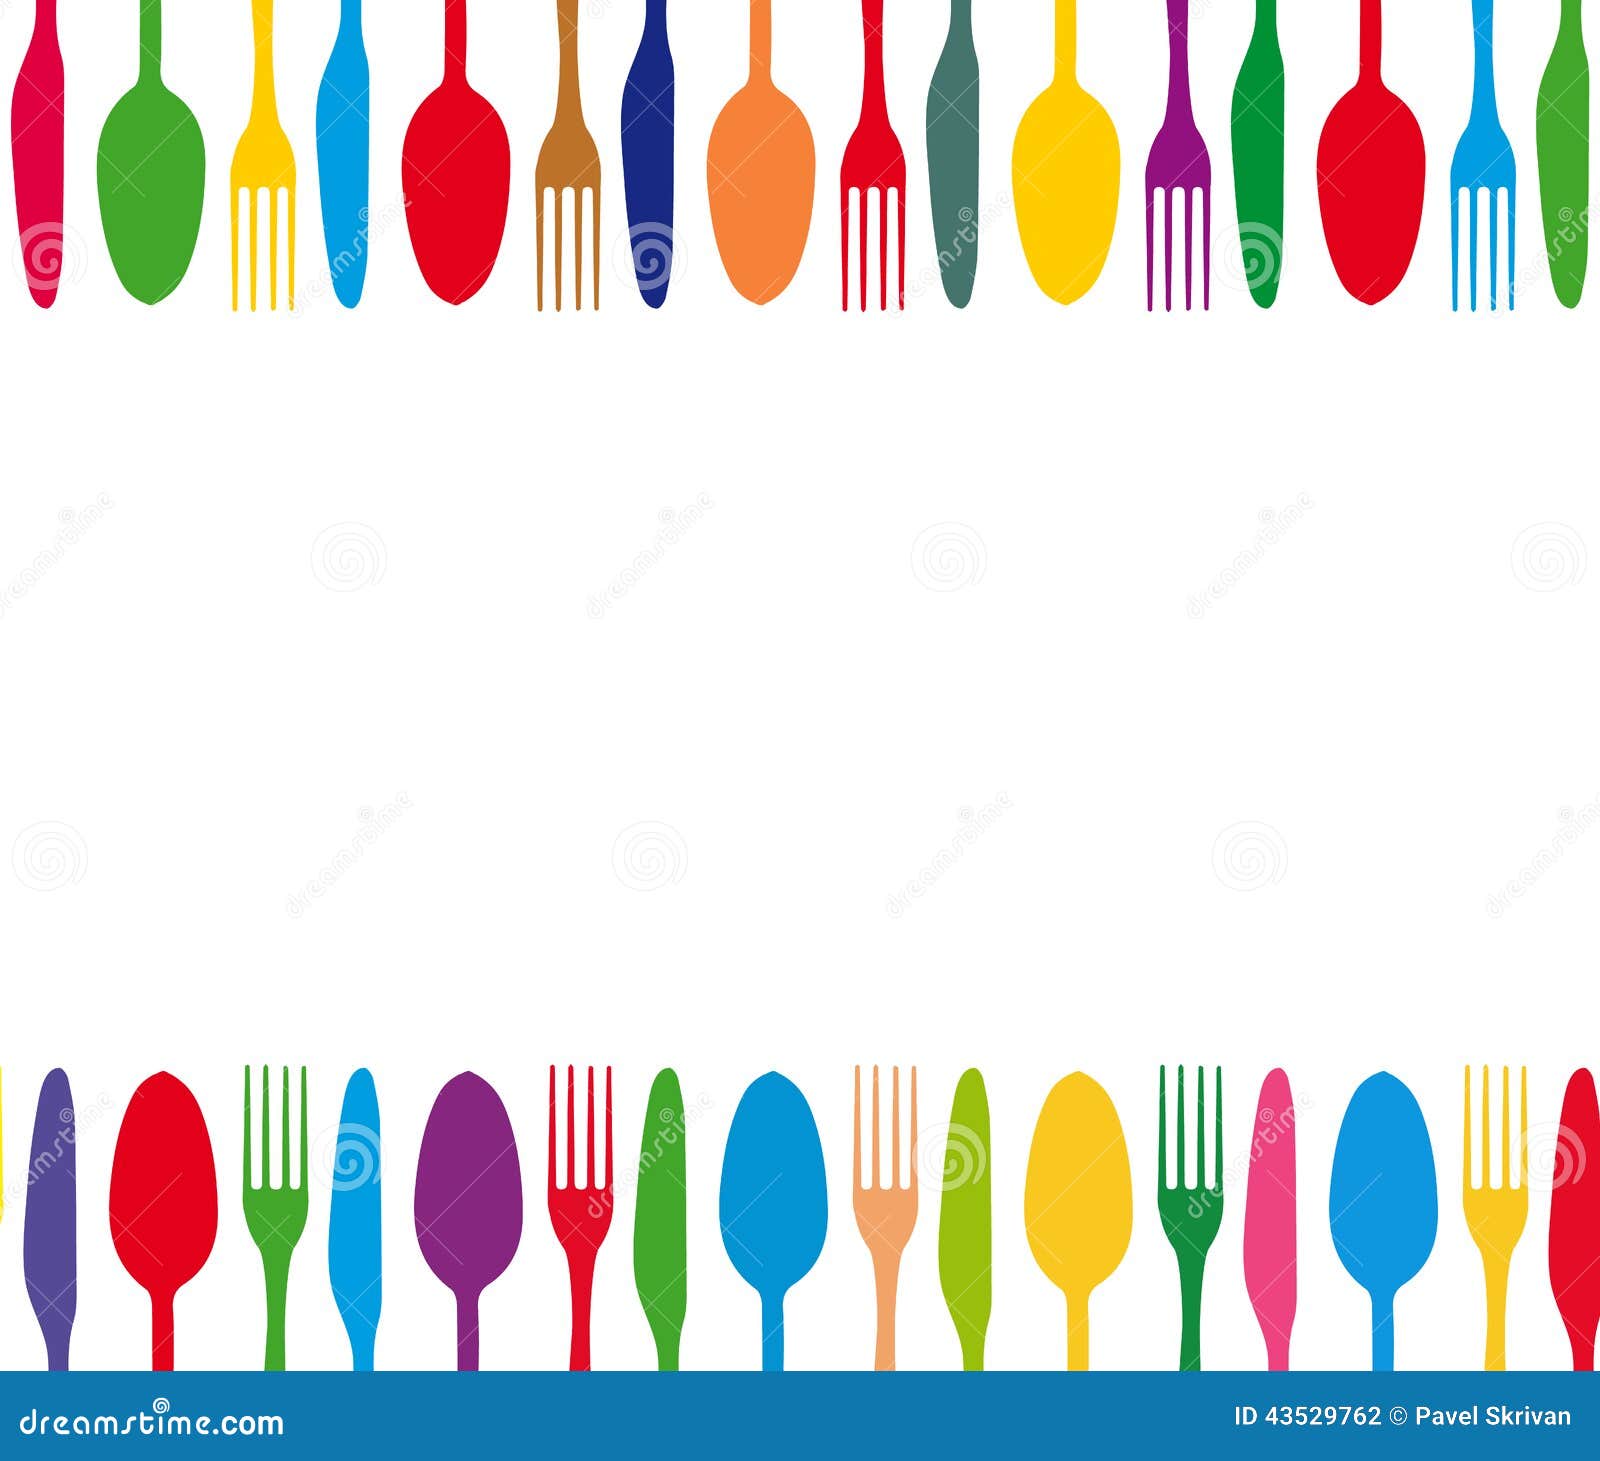 https://thumbs.dreamstime.com/z/cutlery-colorful-background-color-menu-illustration-43529762.jpg